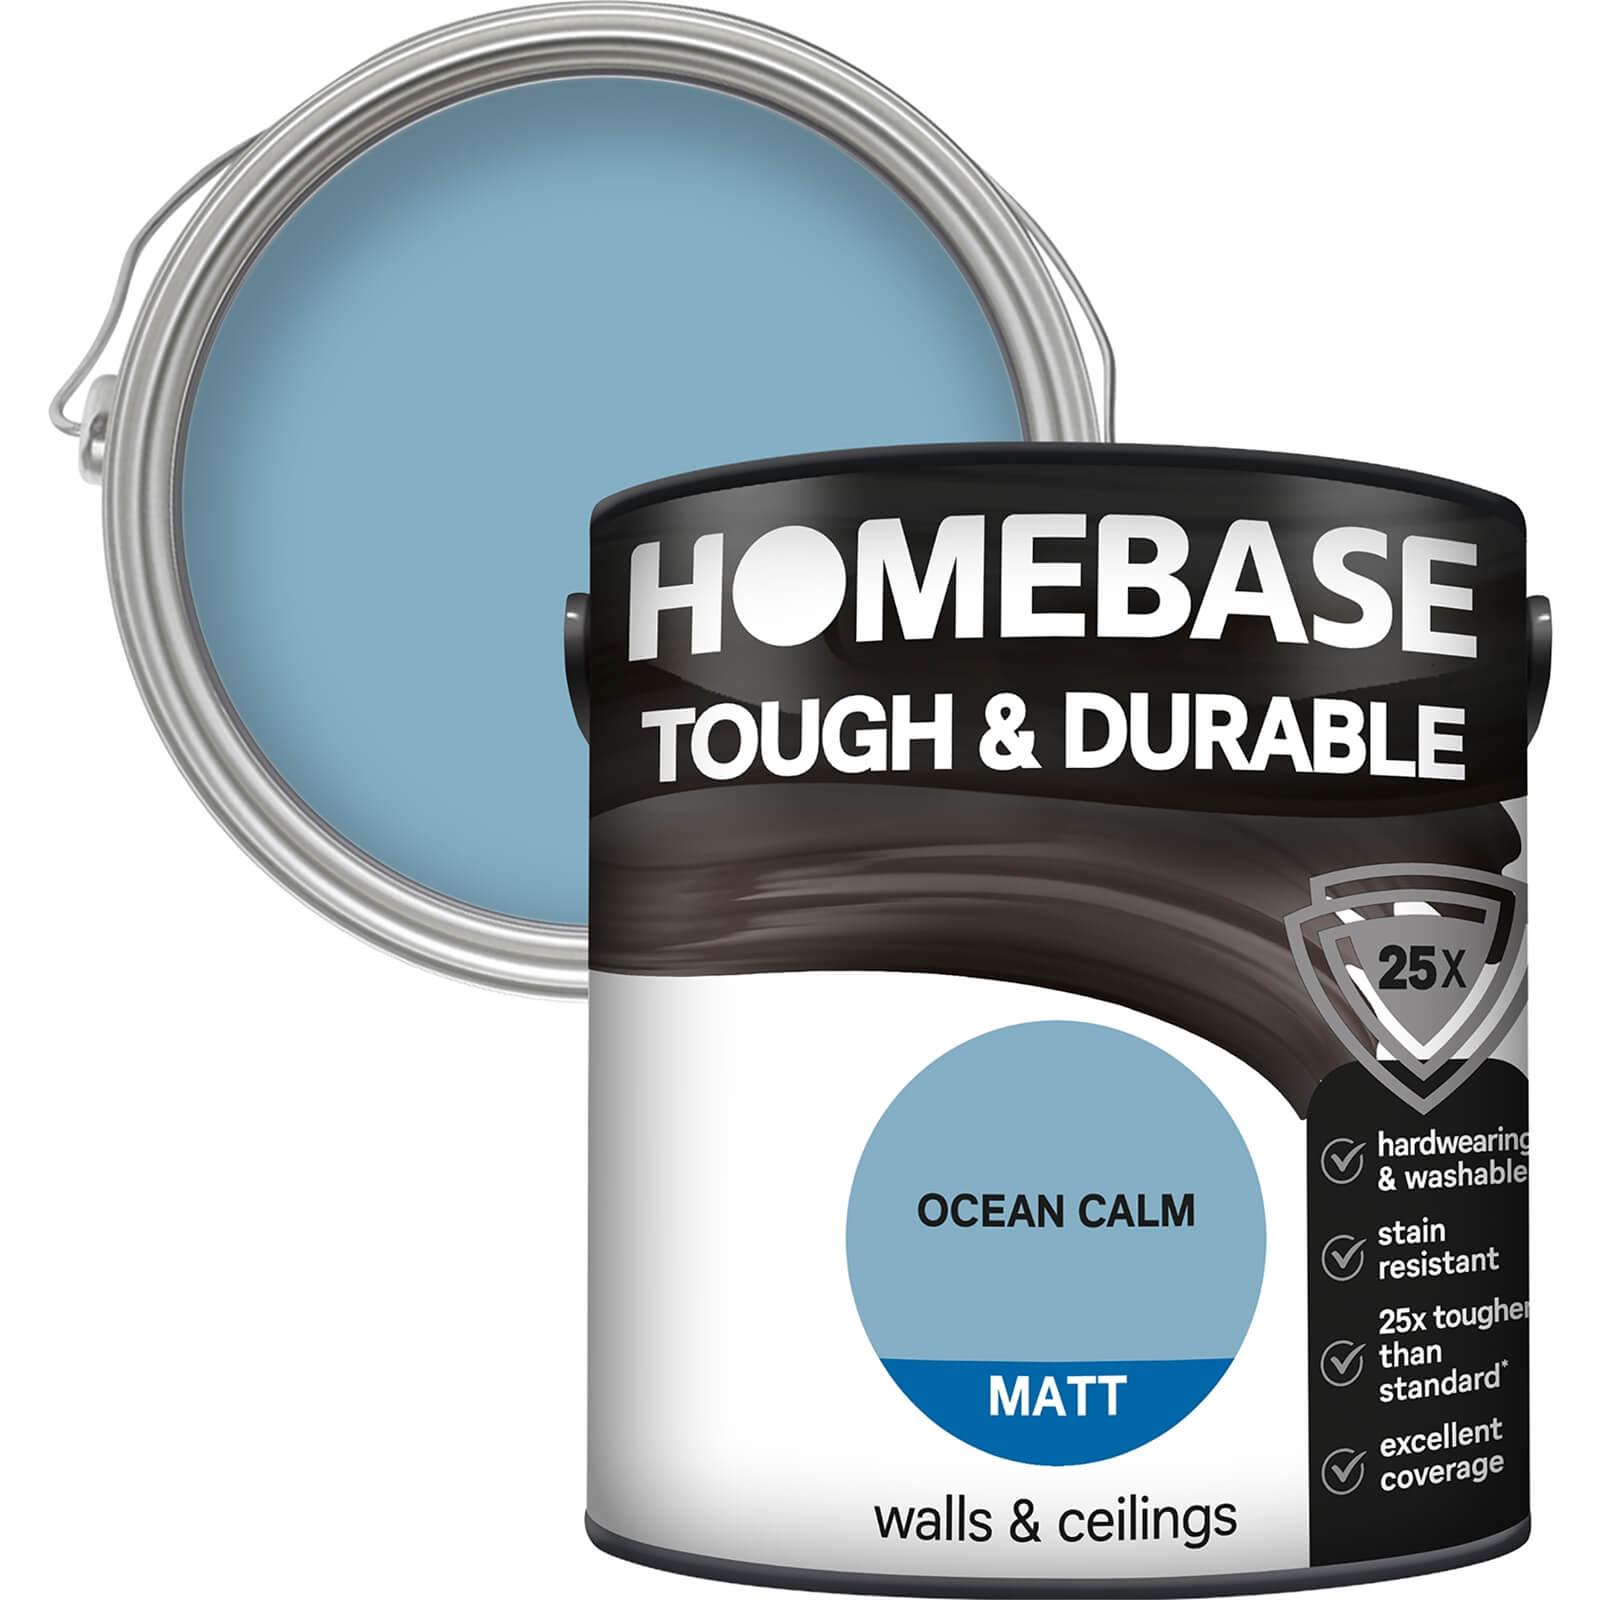 Homebase Tough & Durable Matt Paint Ocean Calm - 2.5L